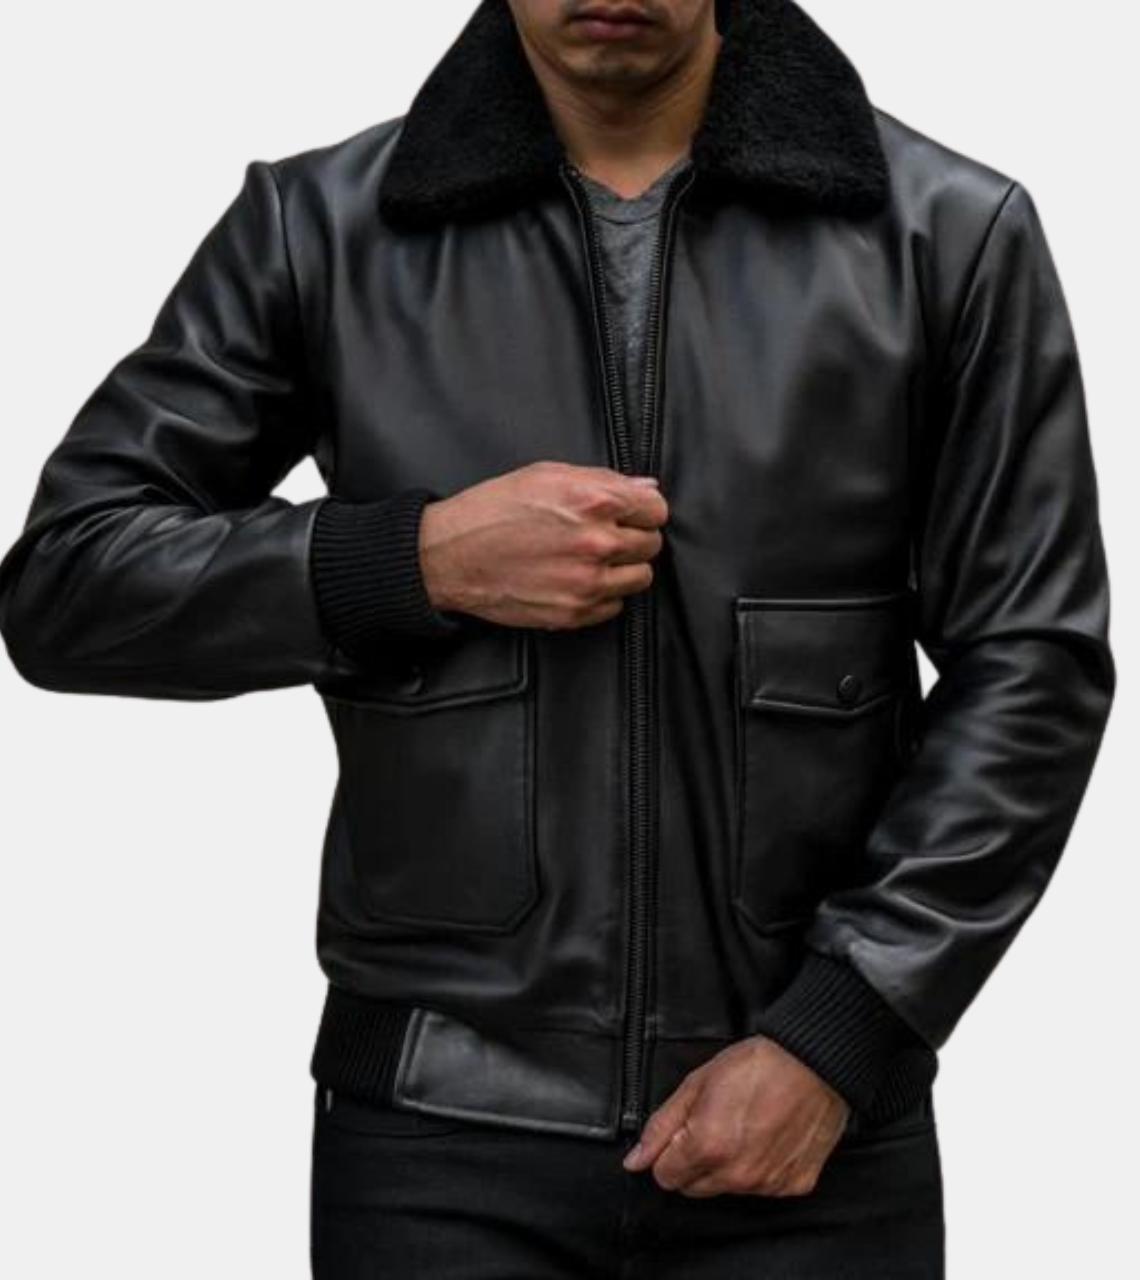  Men's Black Bomber Leather Jacket